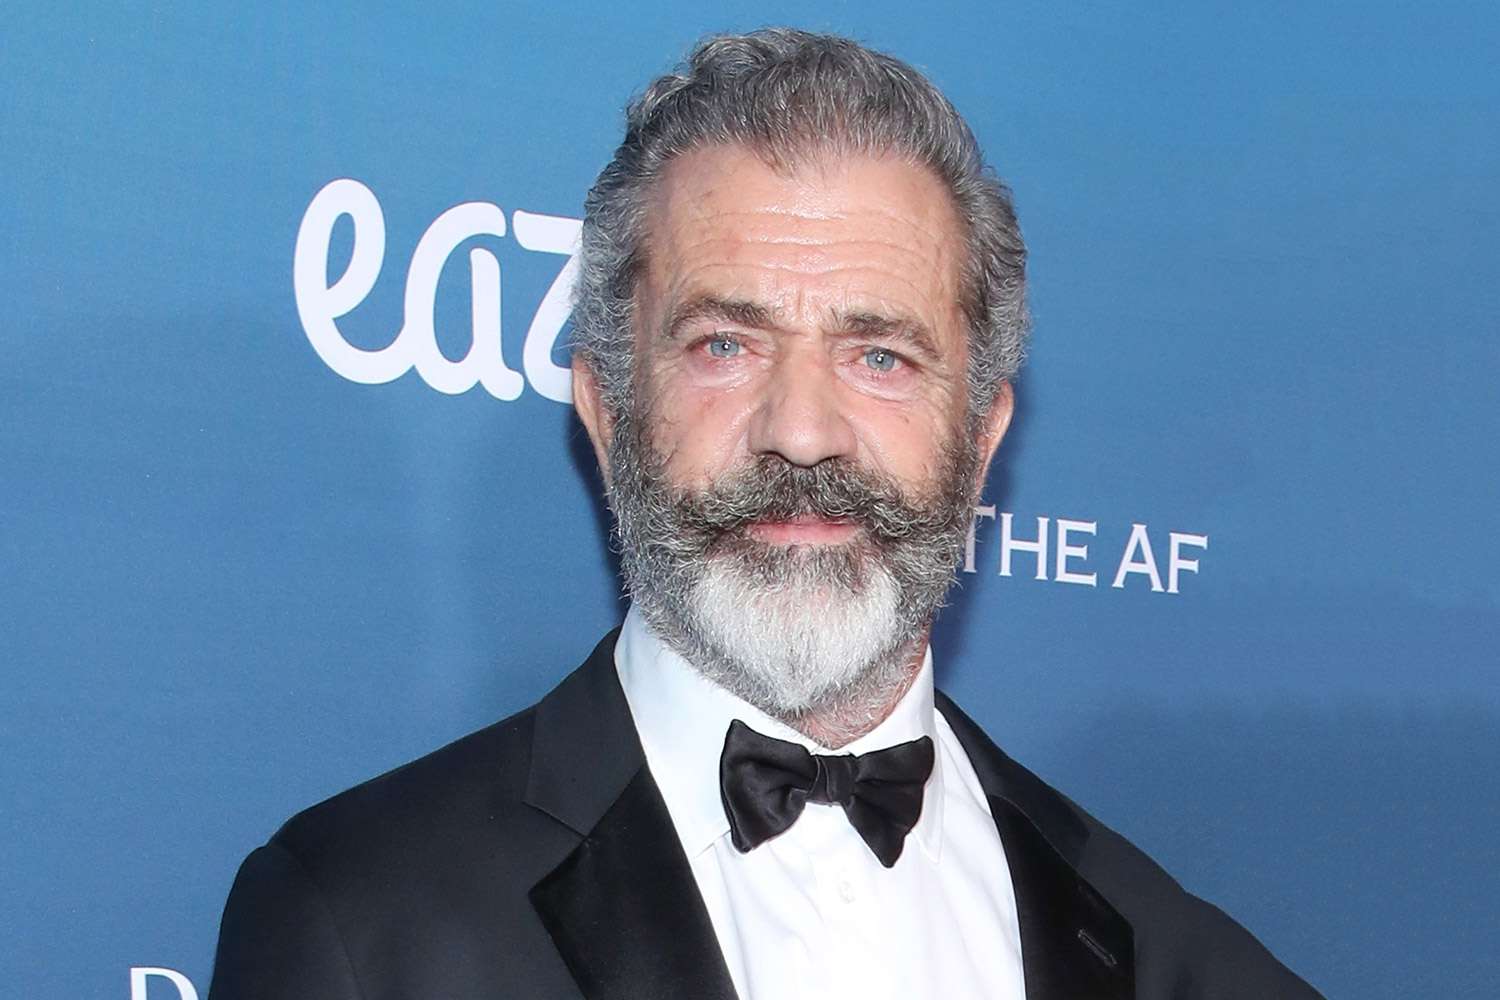 Mel Gibson wearing a black suit